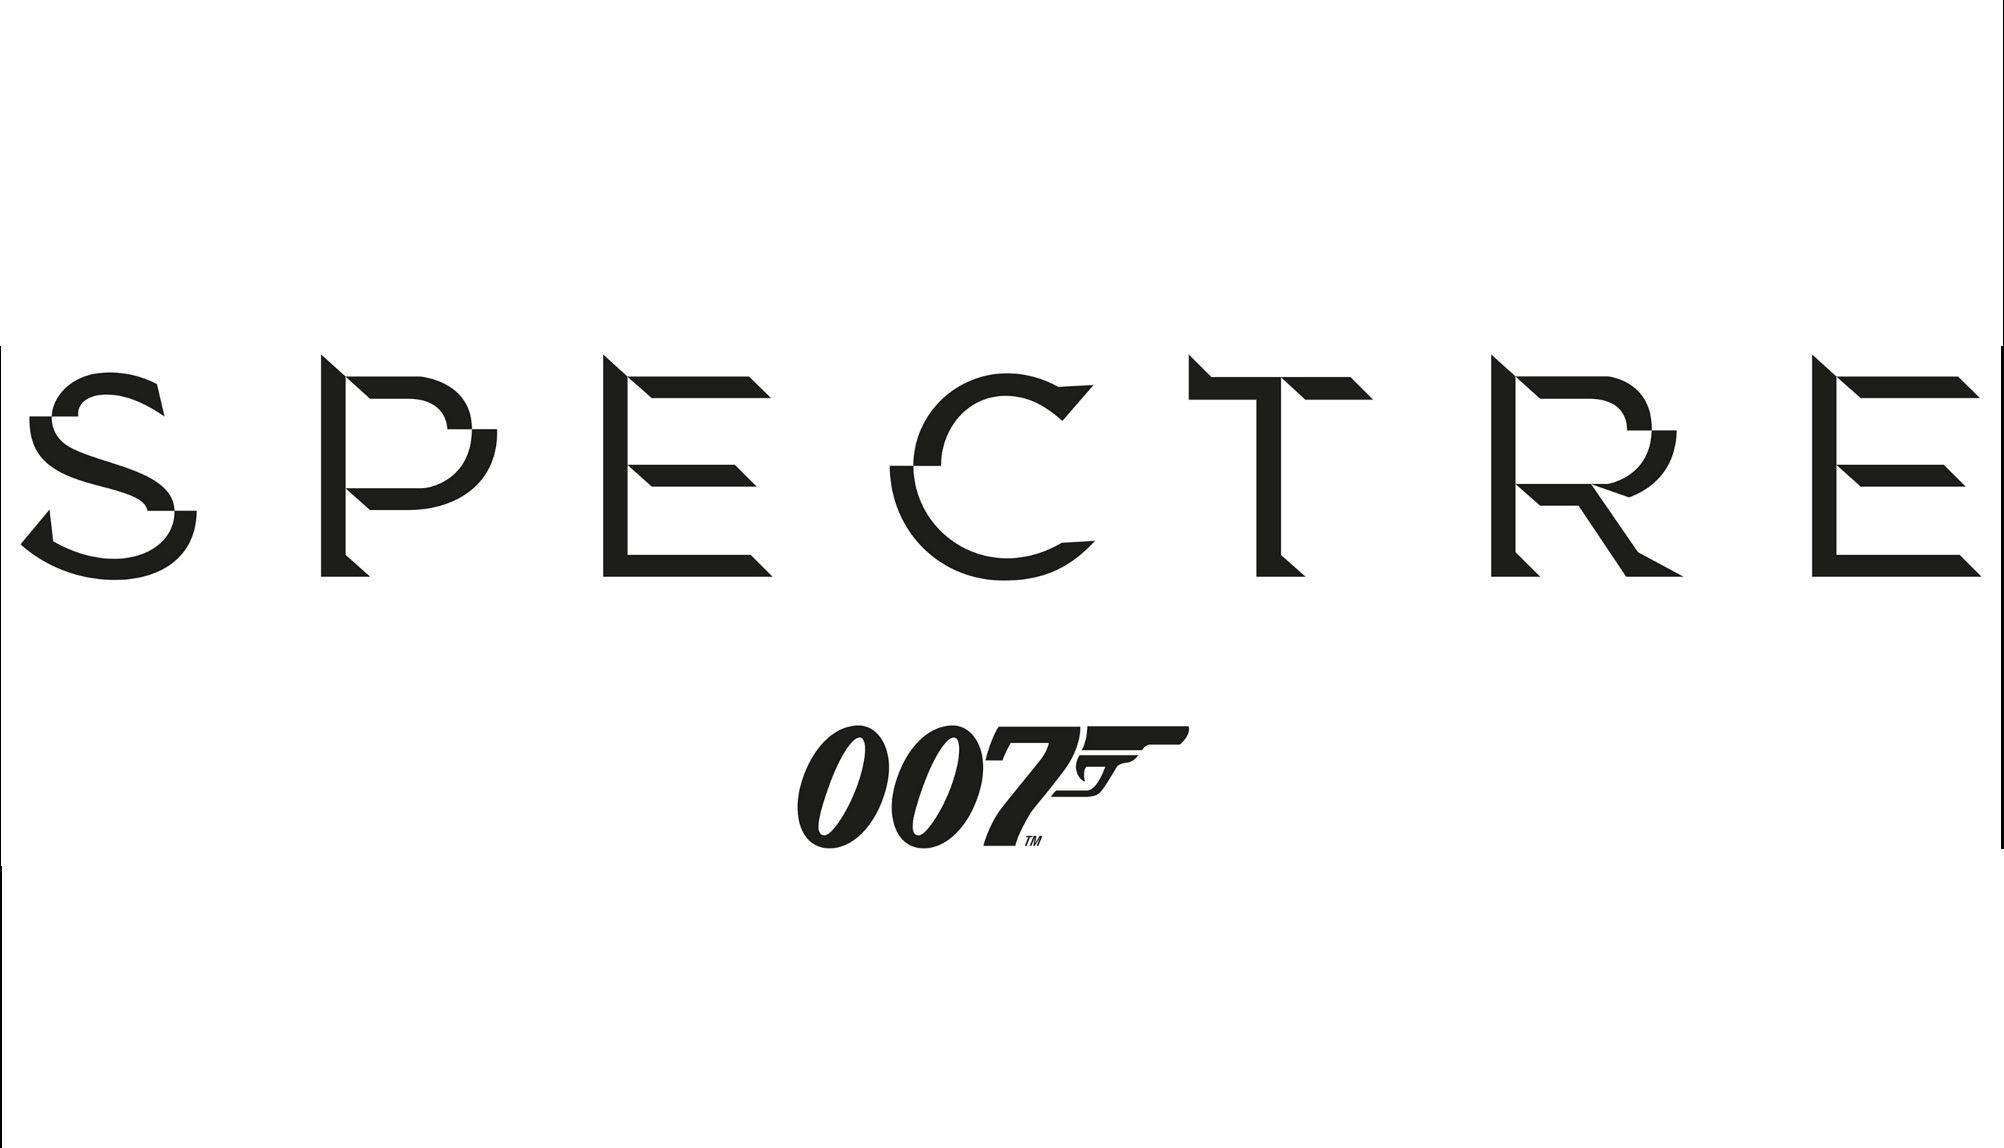 James Bond 007 Logo Wallpaper